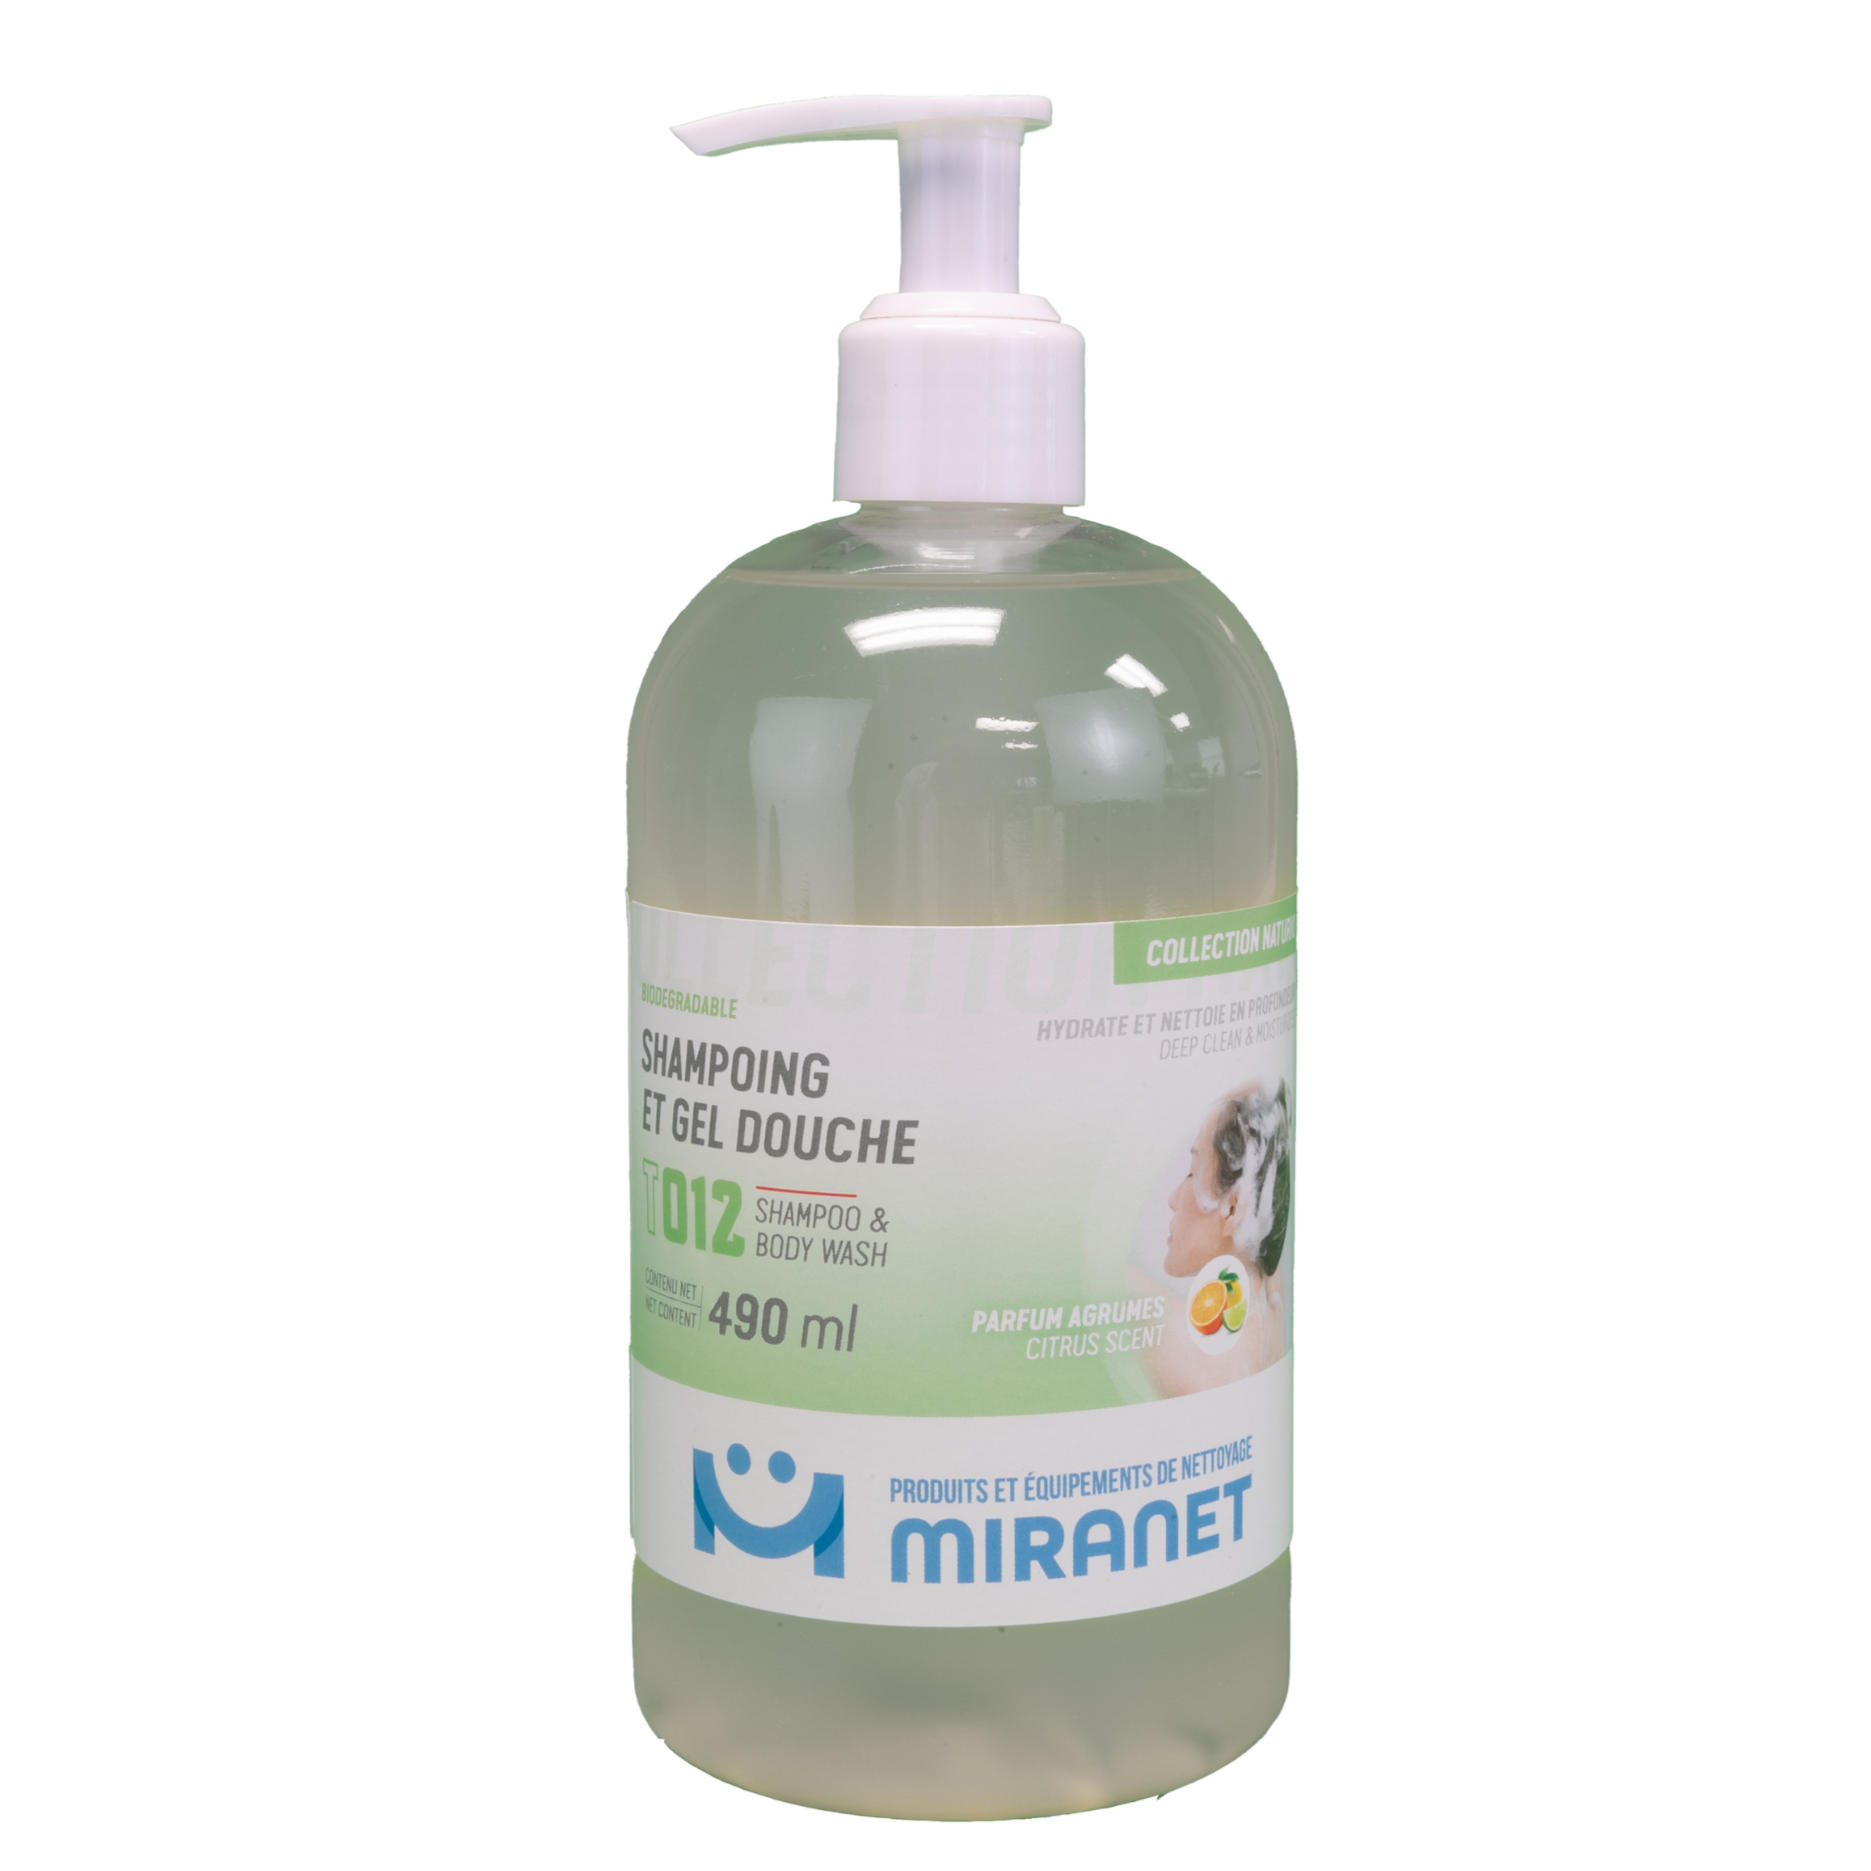 shampooing gel douche t012 biodégradable parfum orange 490ml miranet